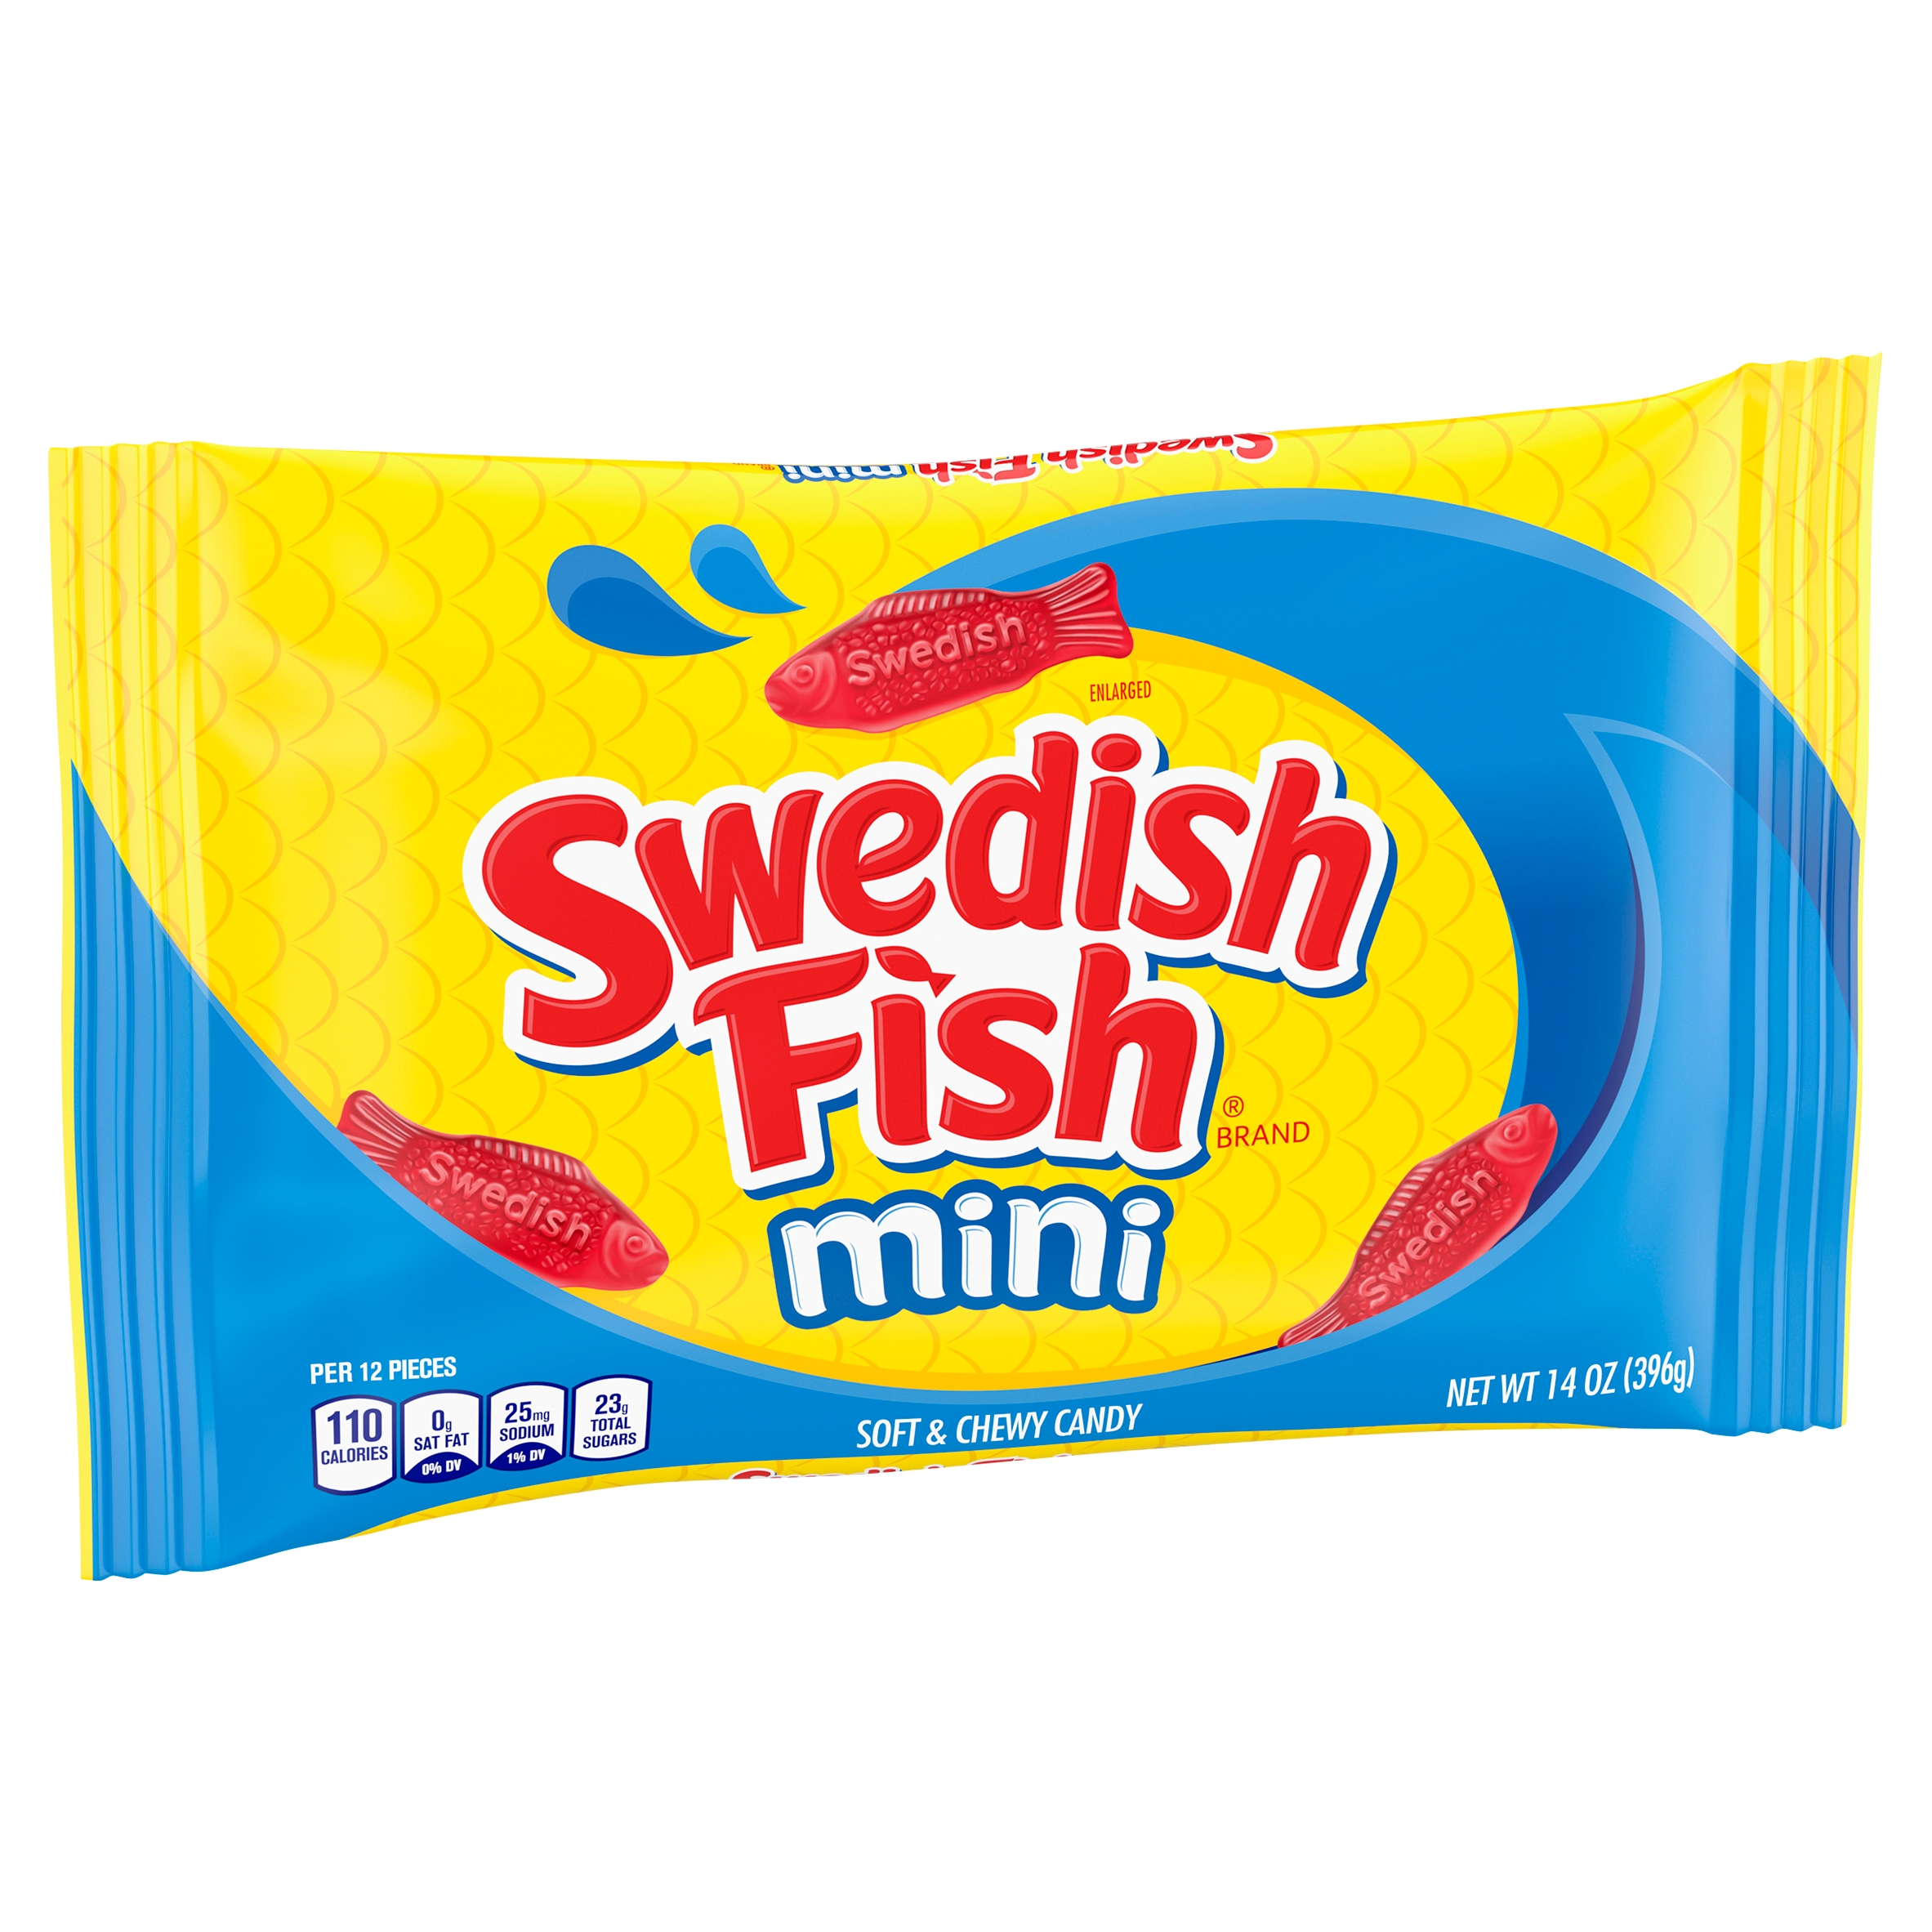 SWEDISH FISH Mini Soft & Chewy Candy, 14 oz Bag - image 1 of 9